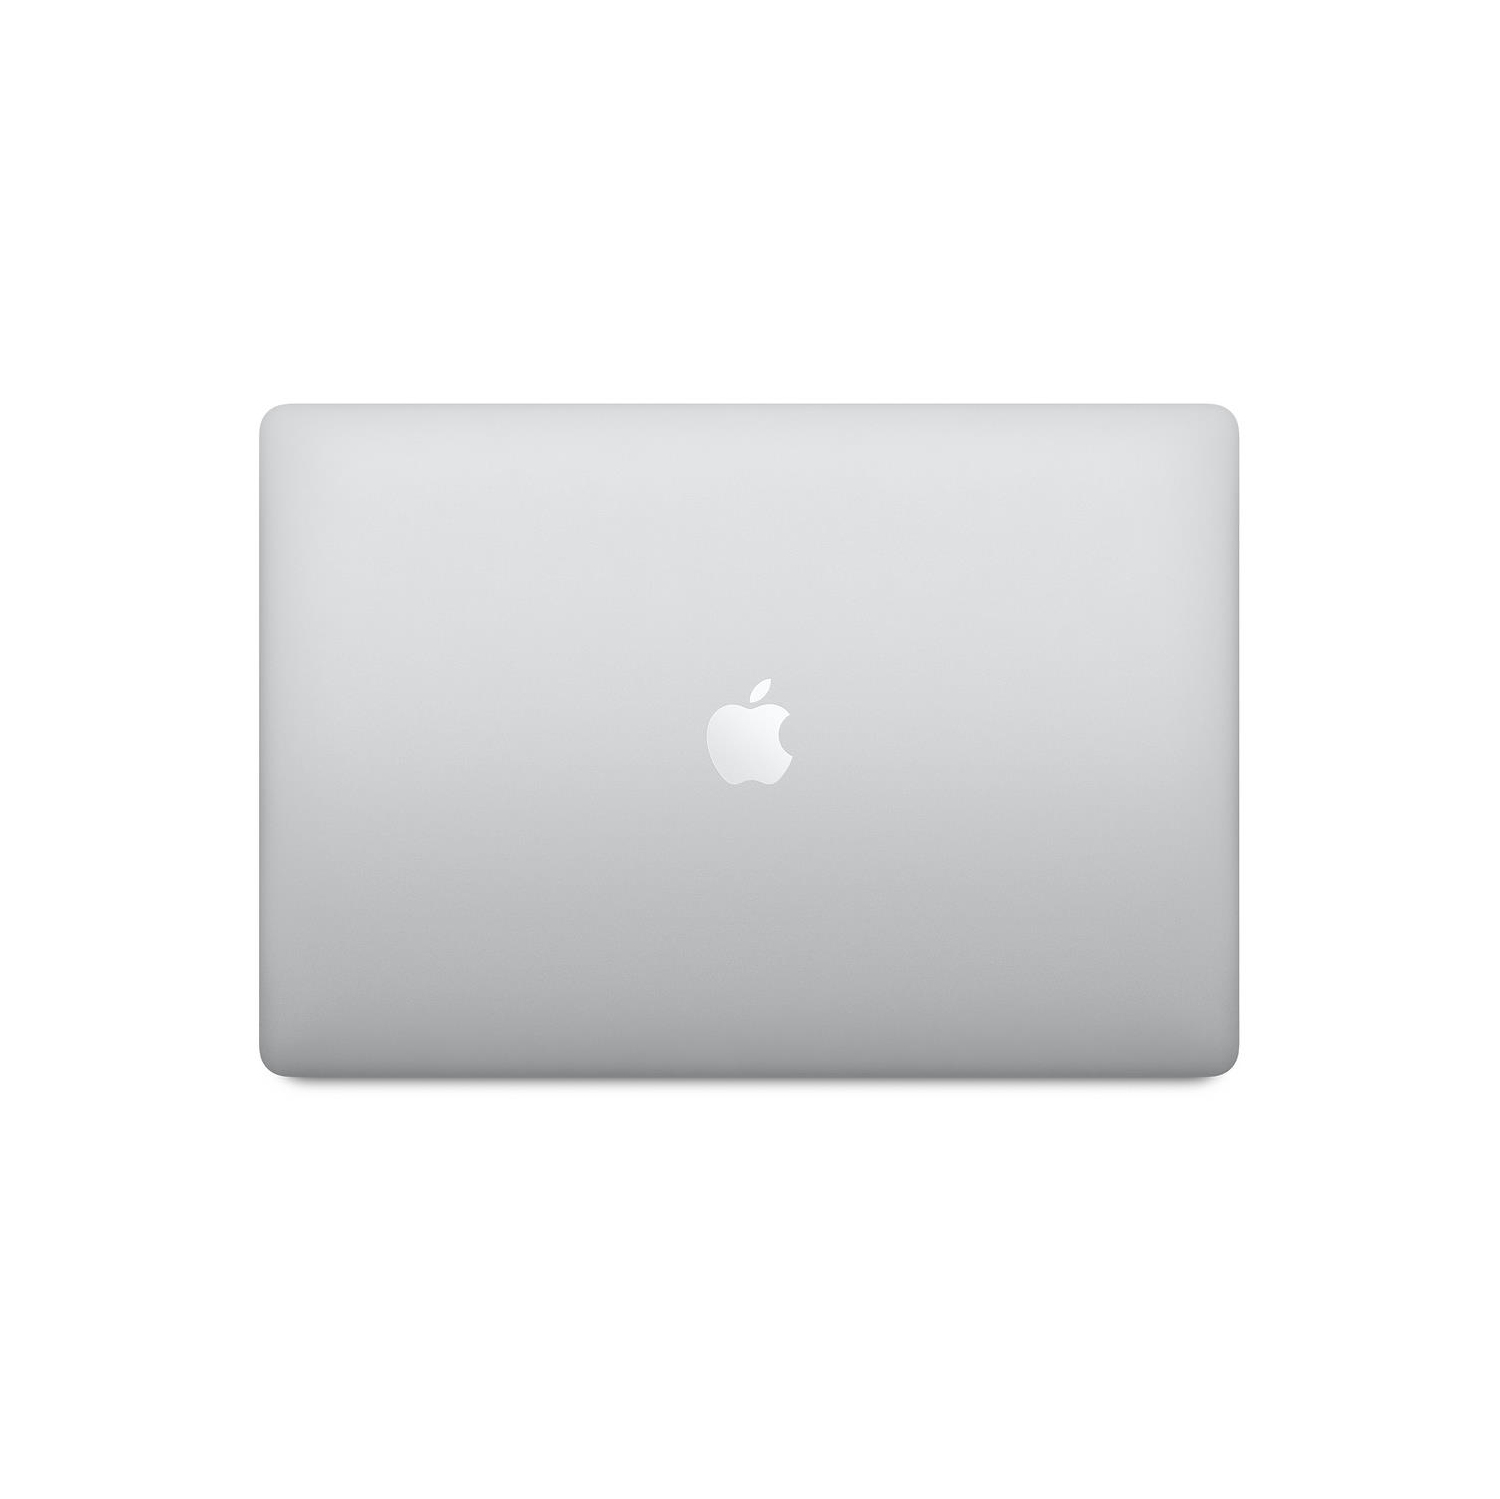 Refurbished - Excellent) Macbook Pro 16-inch (Silver, 1yr Warranty